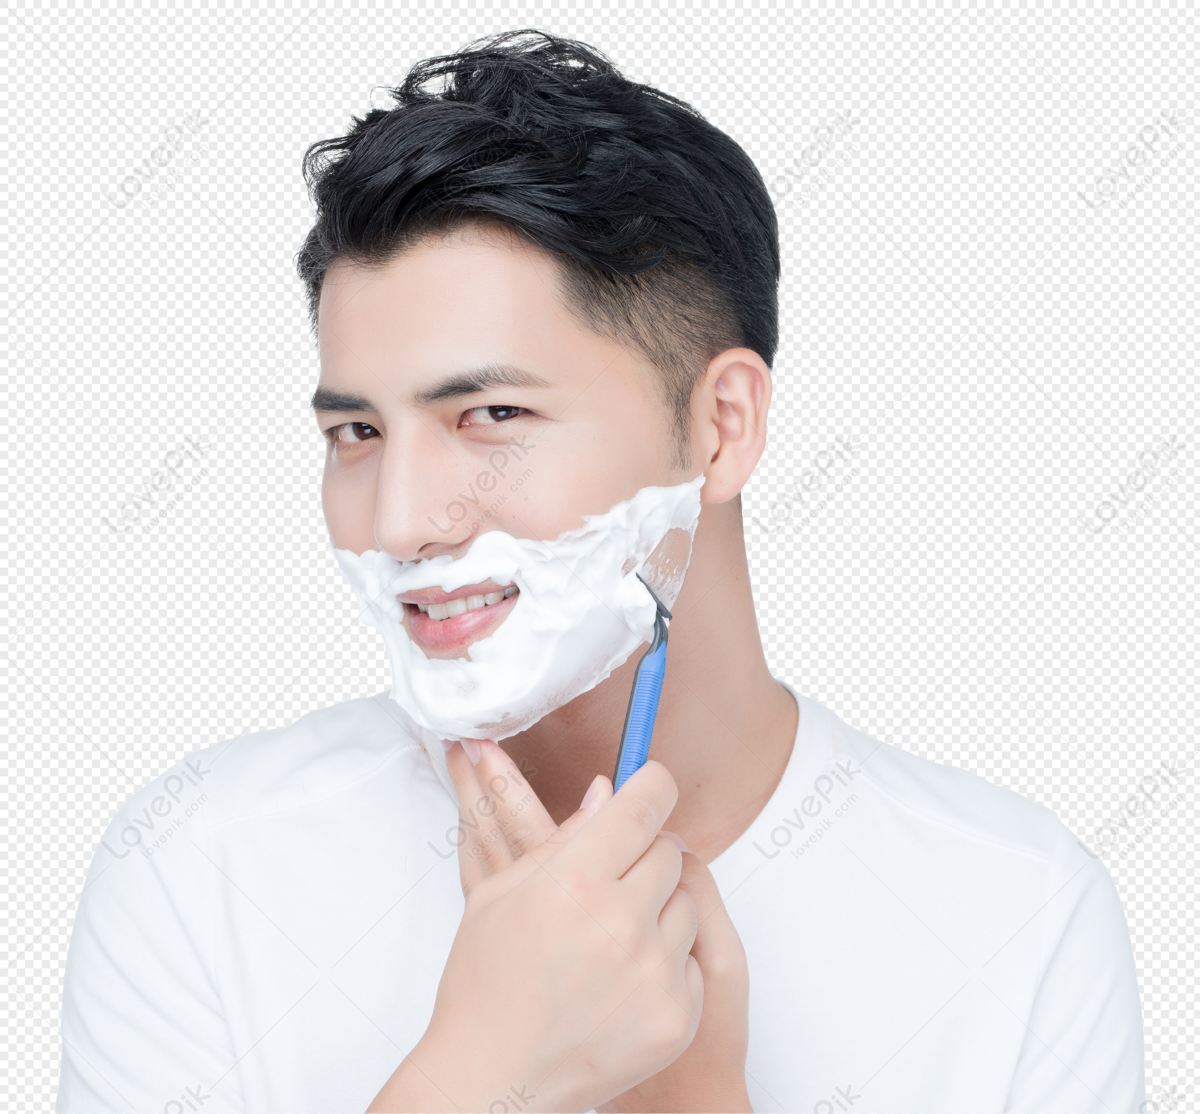 shaving face clipart